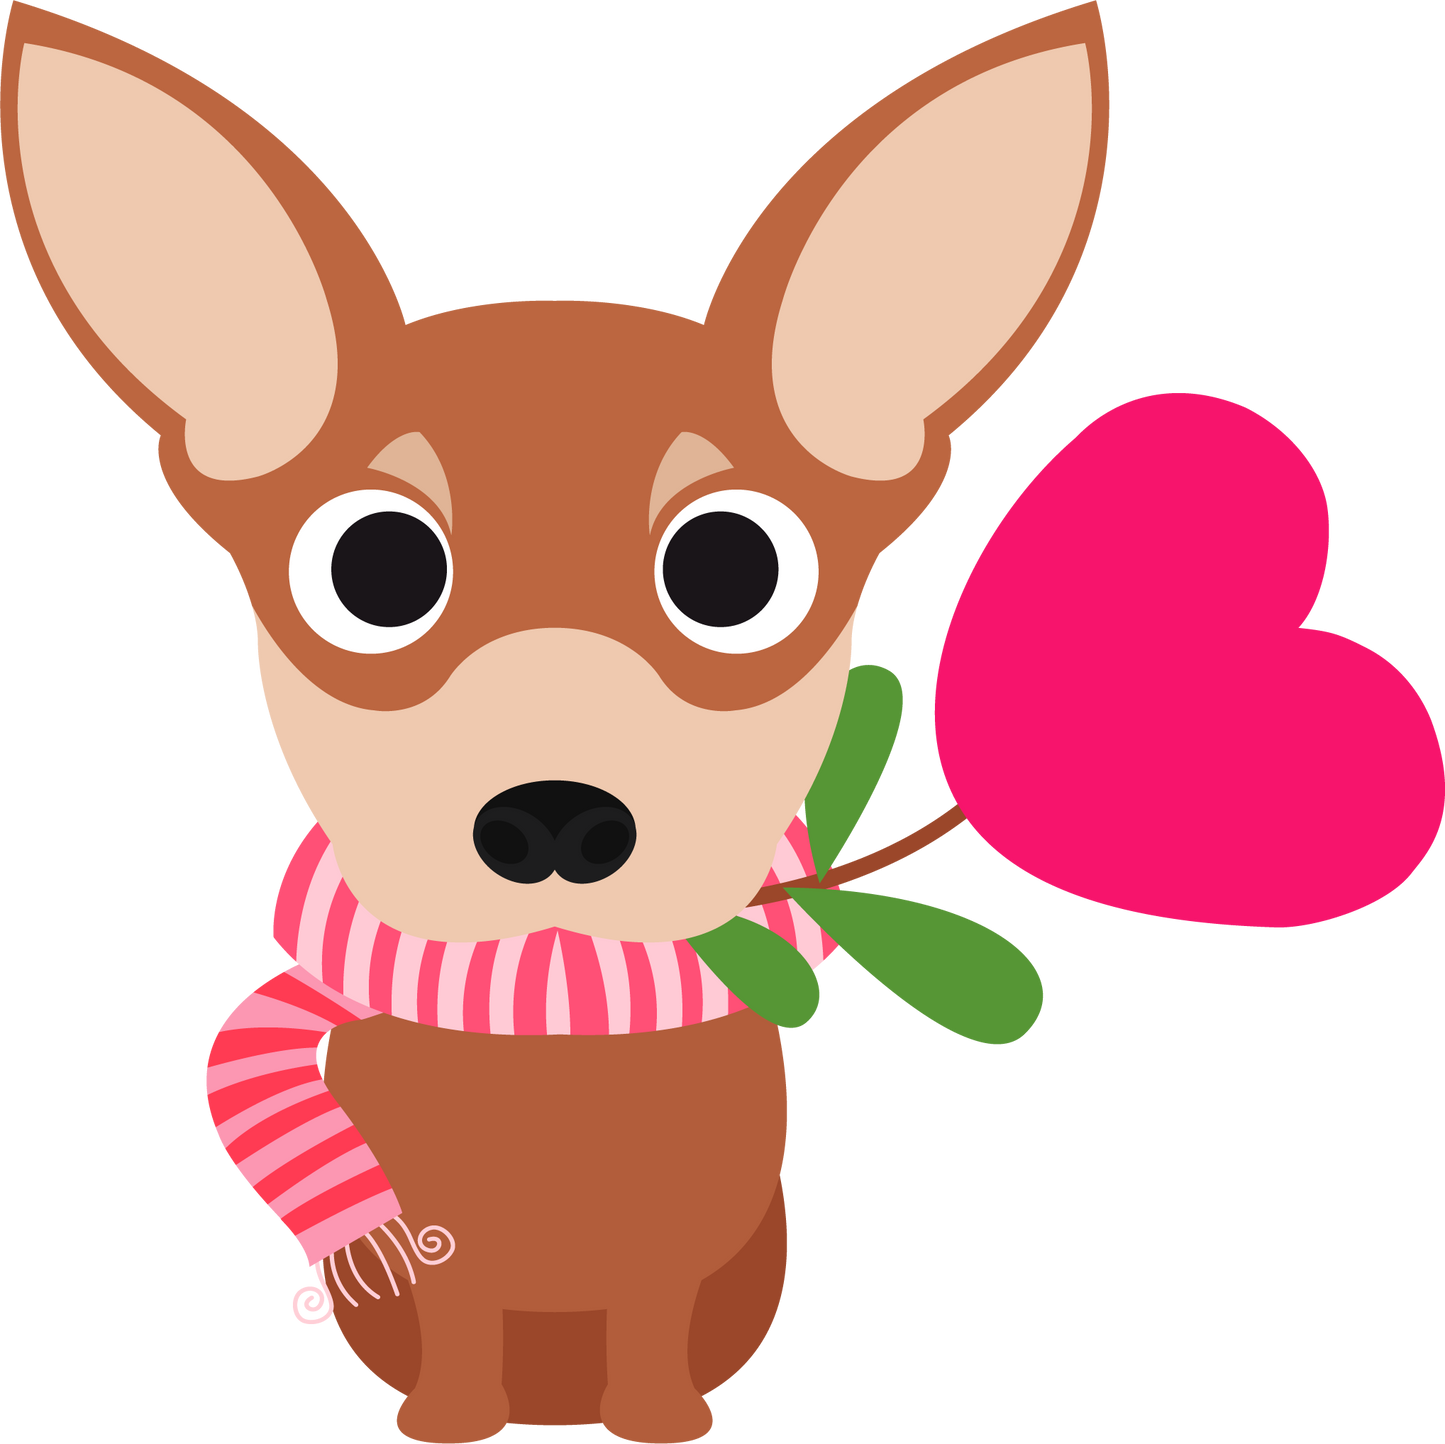 Corgi dog Valentine’s Day cookie cutter